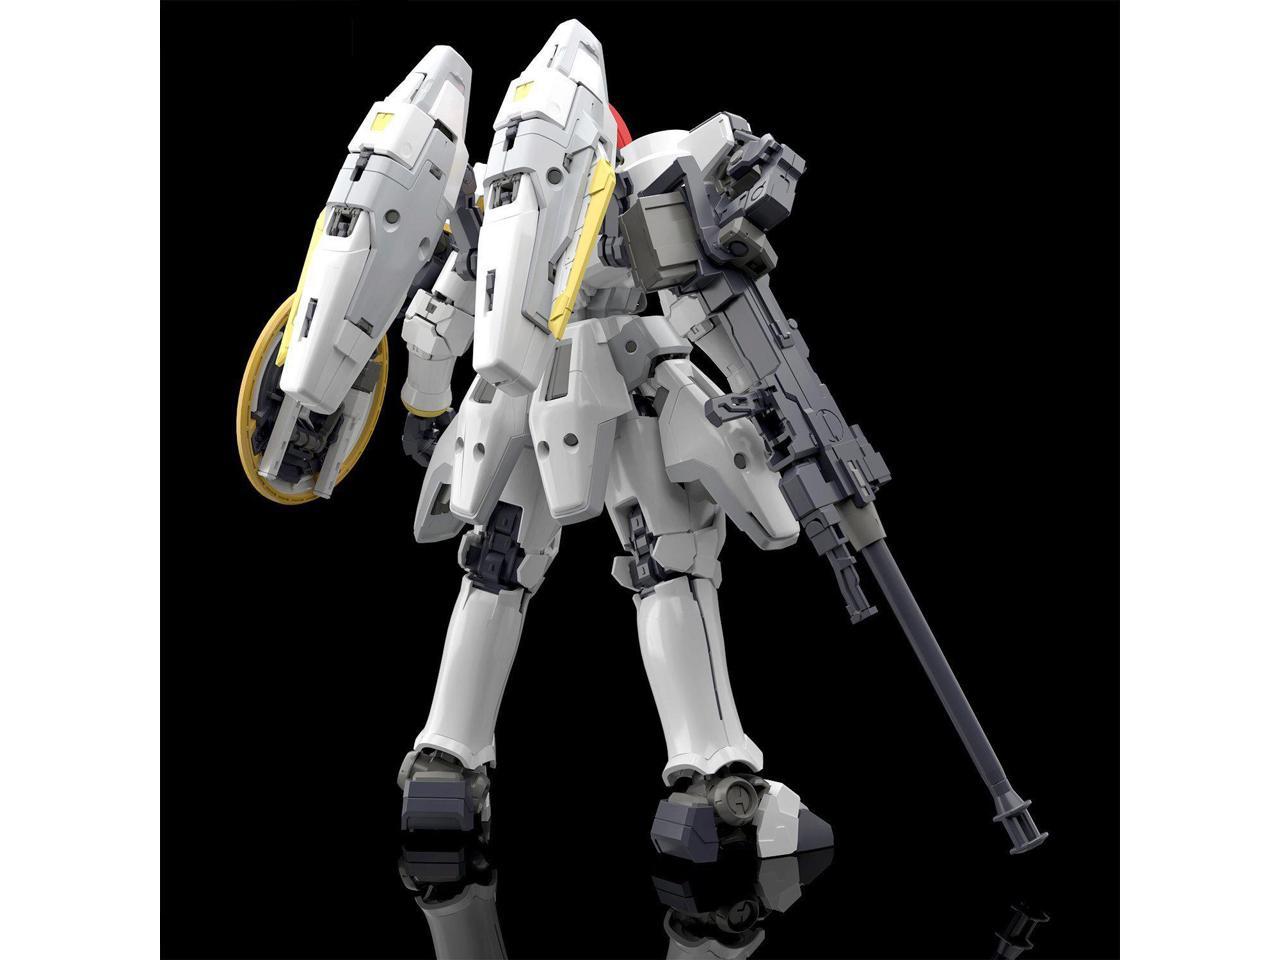 Bandai Hobby Gundam Wing Tallgeese EW Endless Waltz RG 1/144 Model Kit USA NEW 